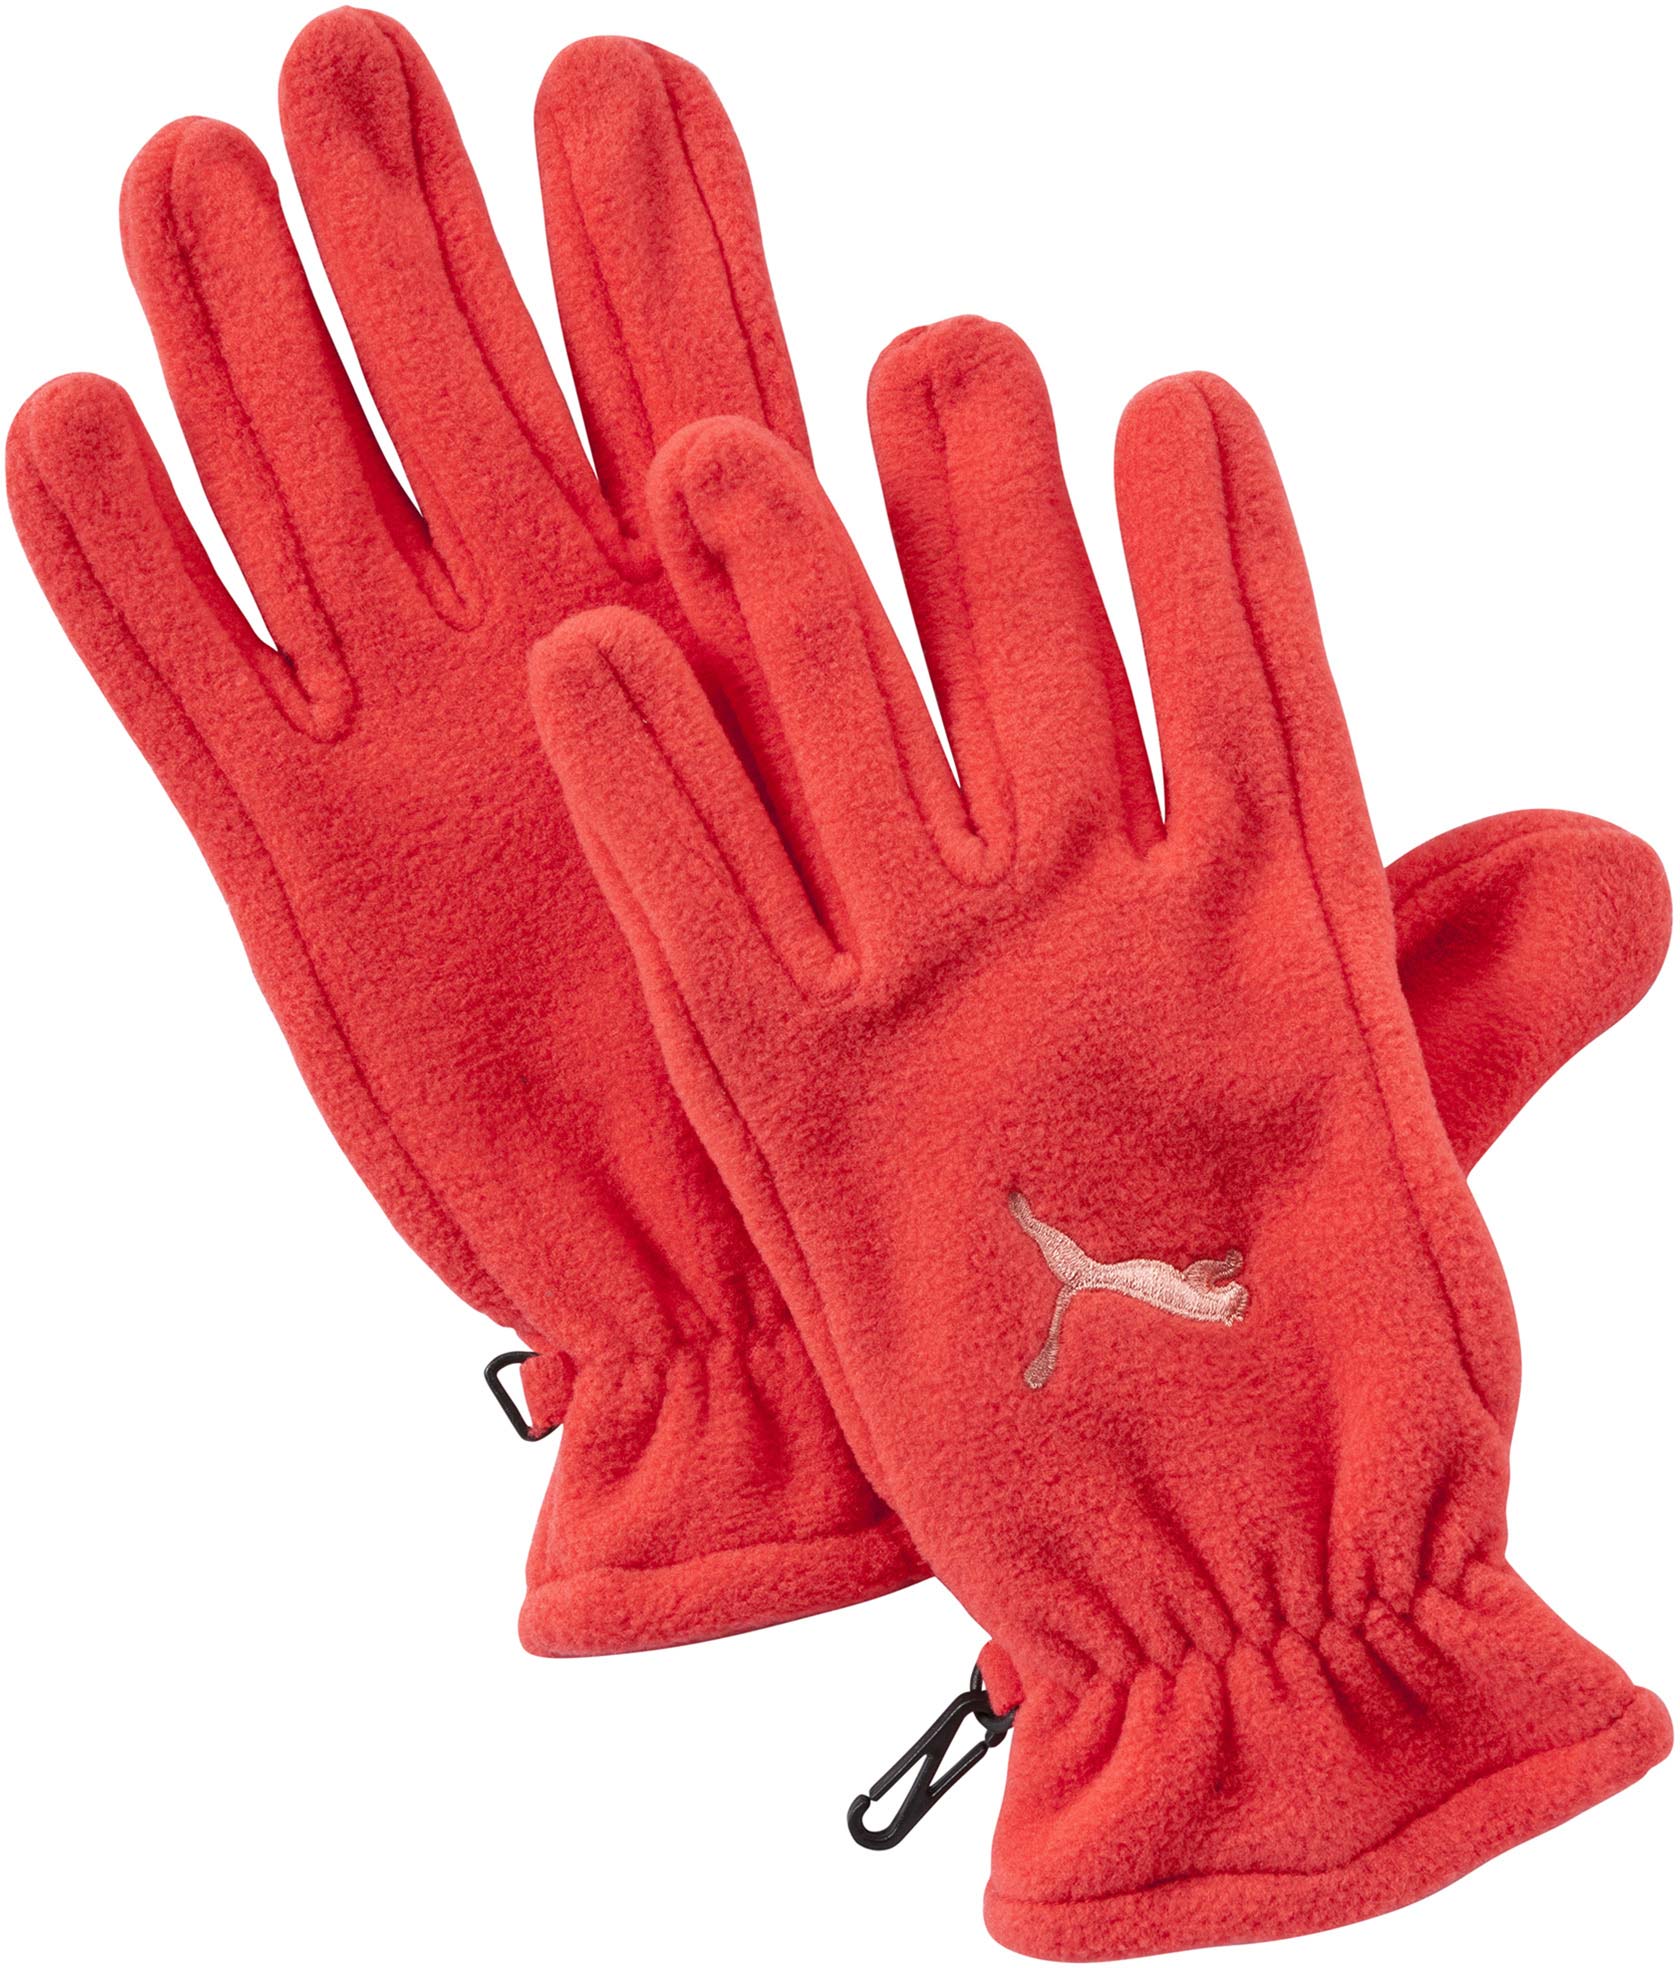 FUNDAMENTALS FLEECE GLOVES - Winter Gloves